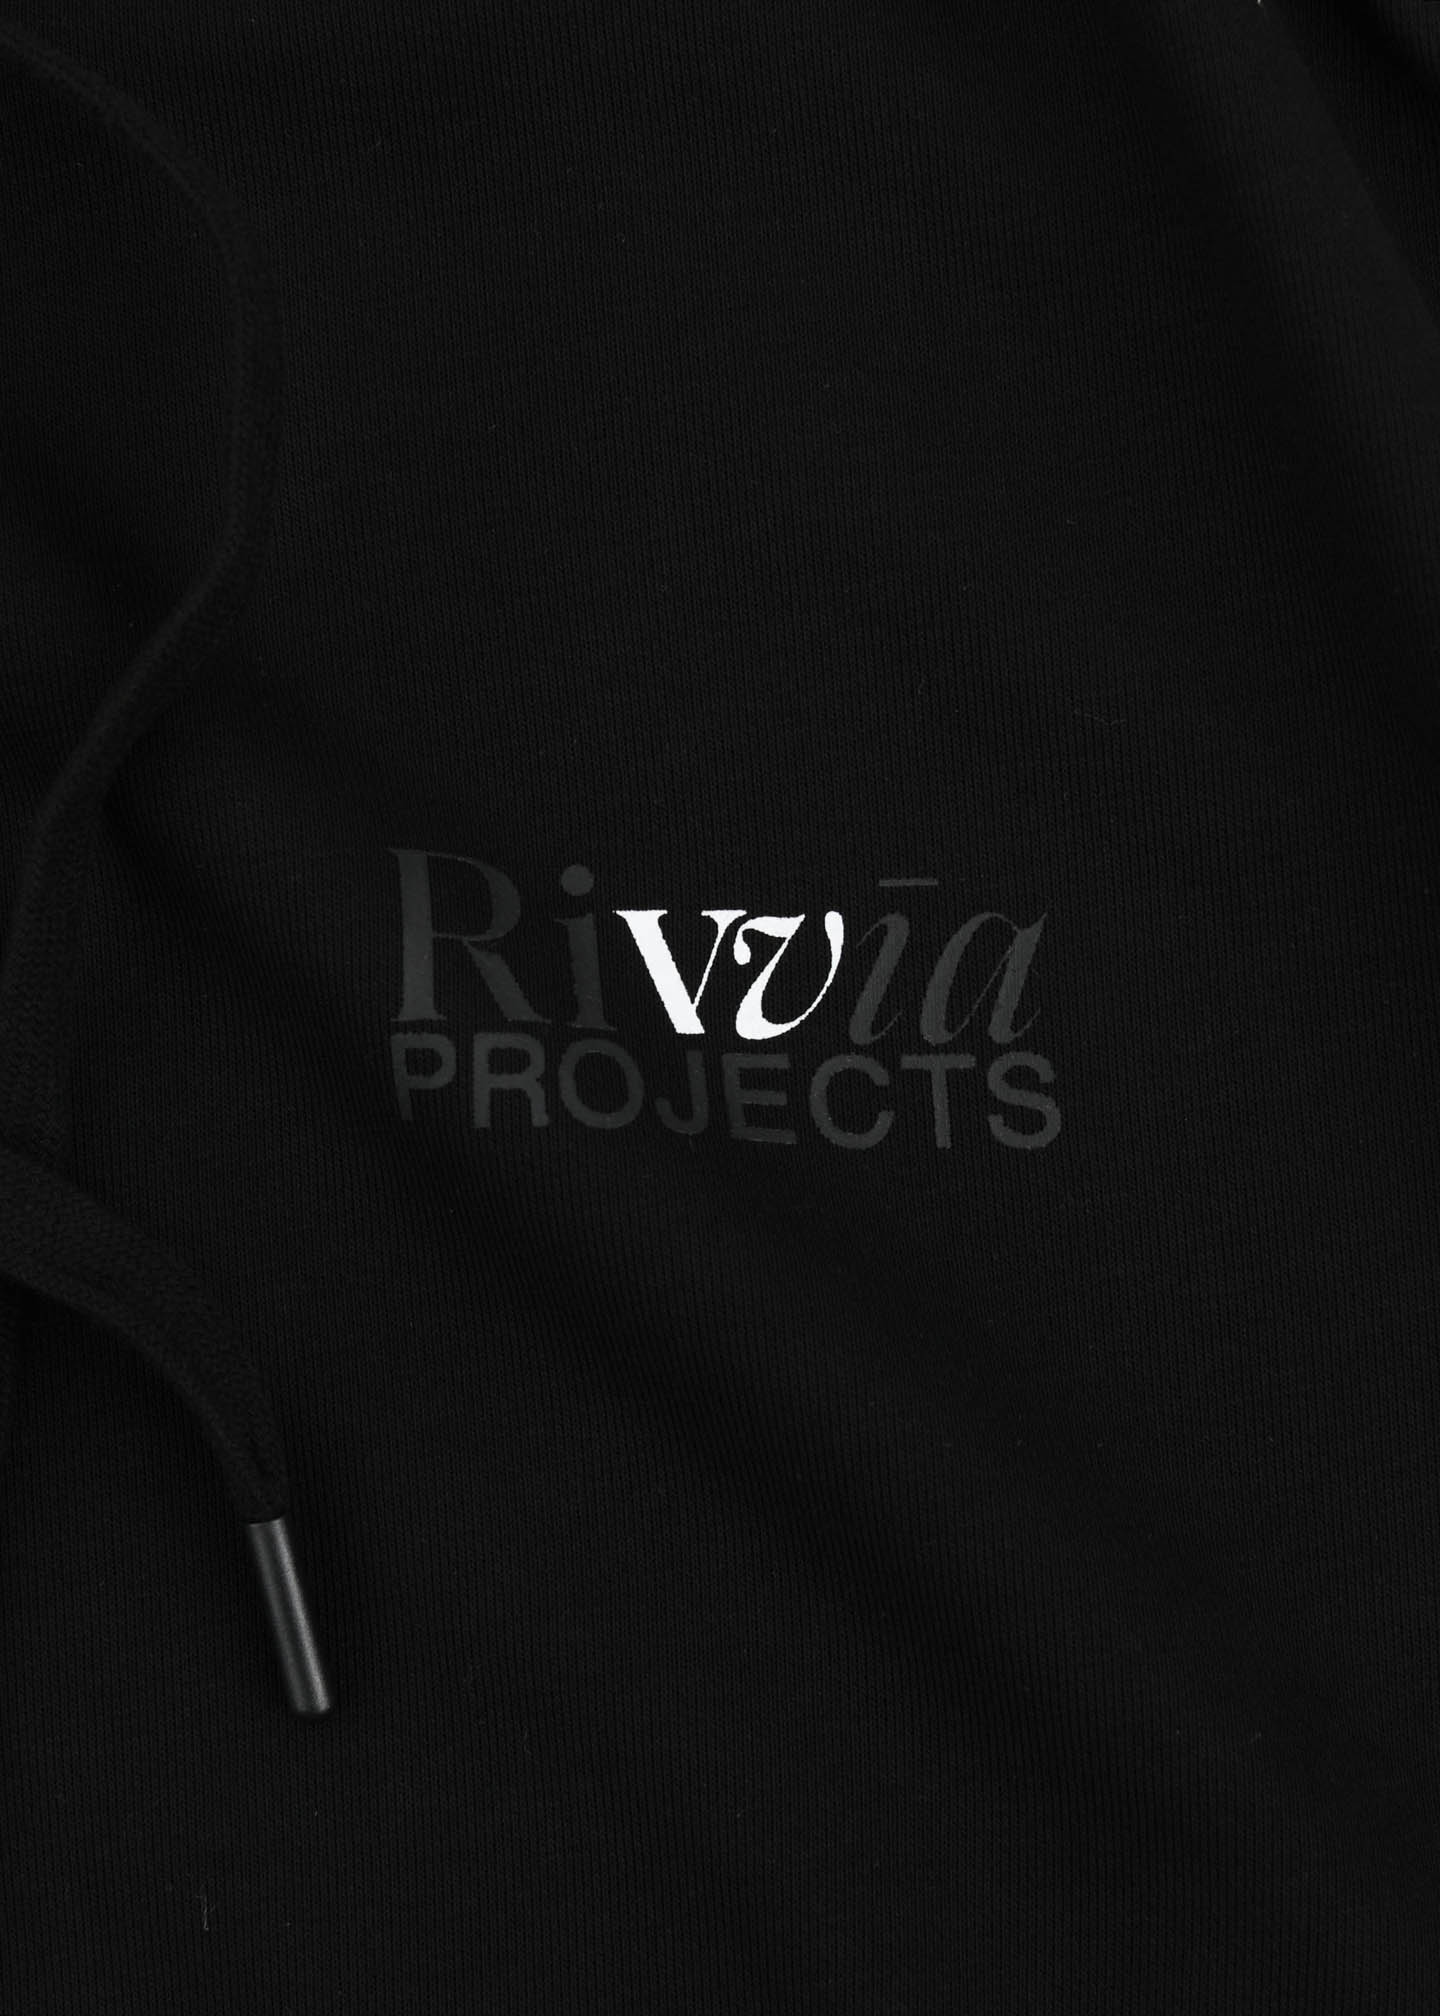 VV CREW : Black – Rivvia Projects